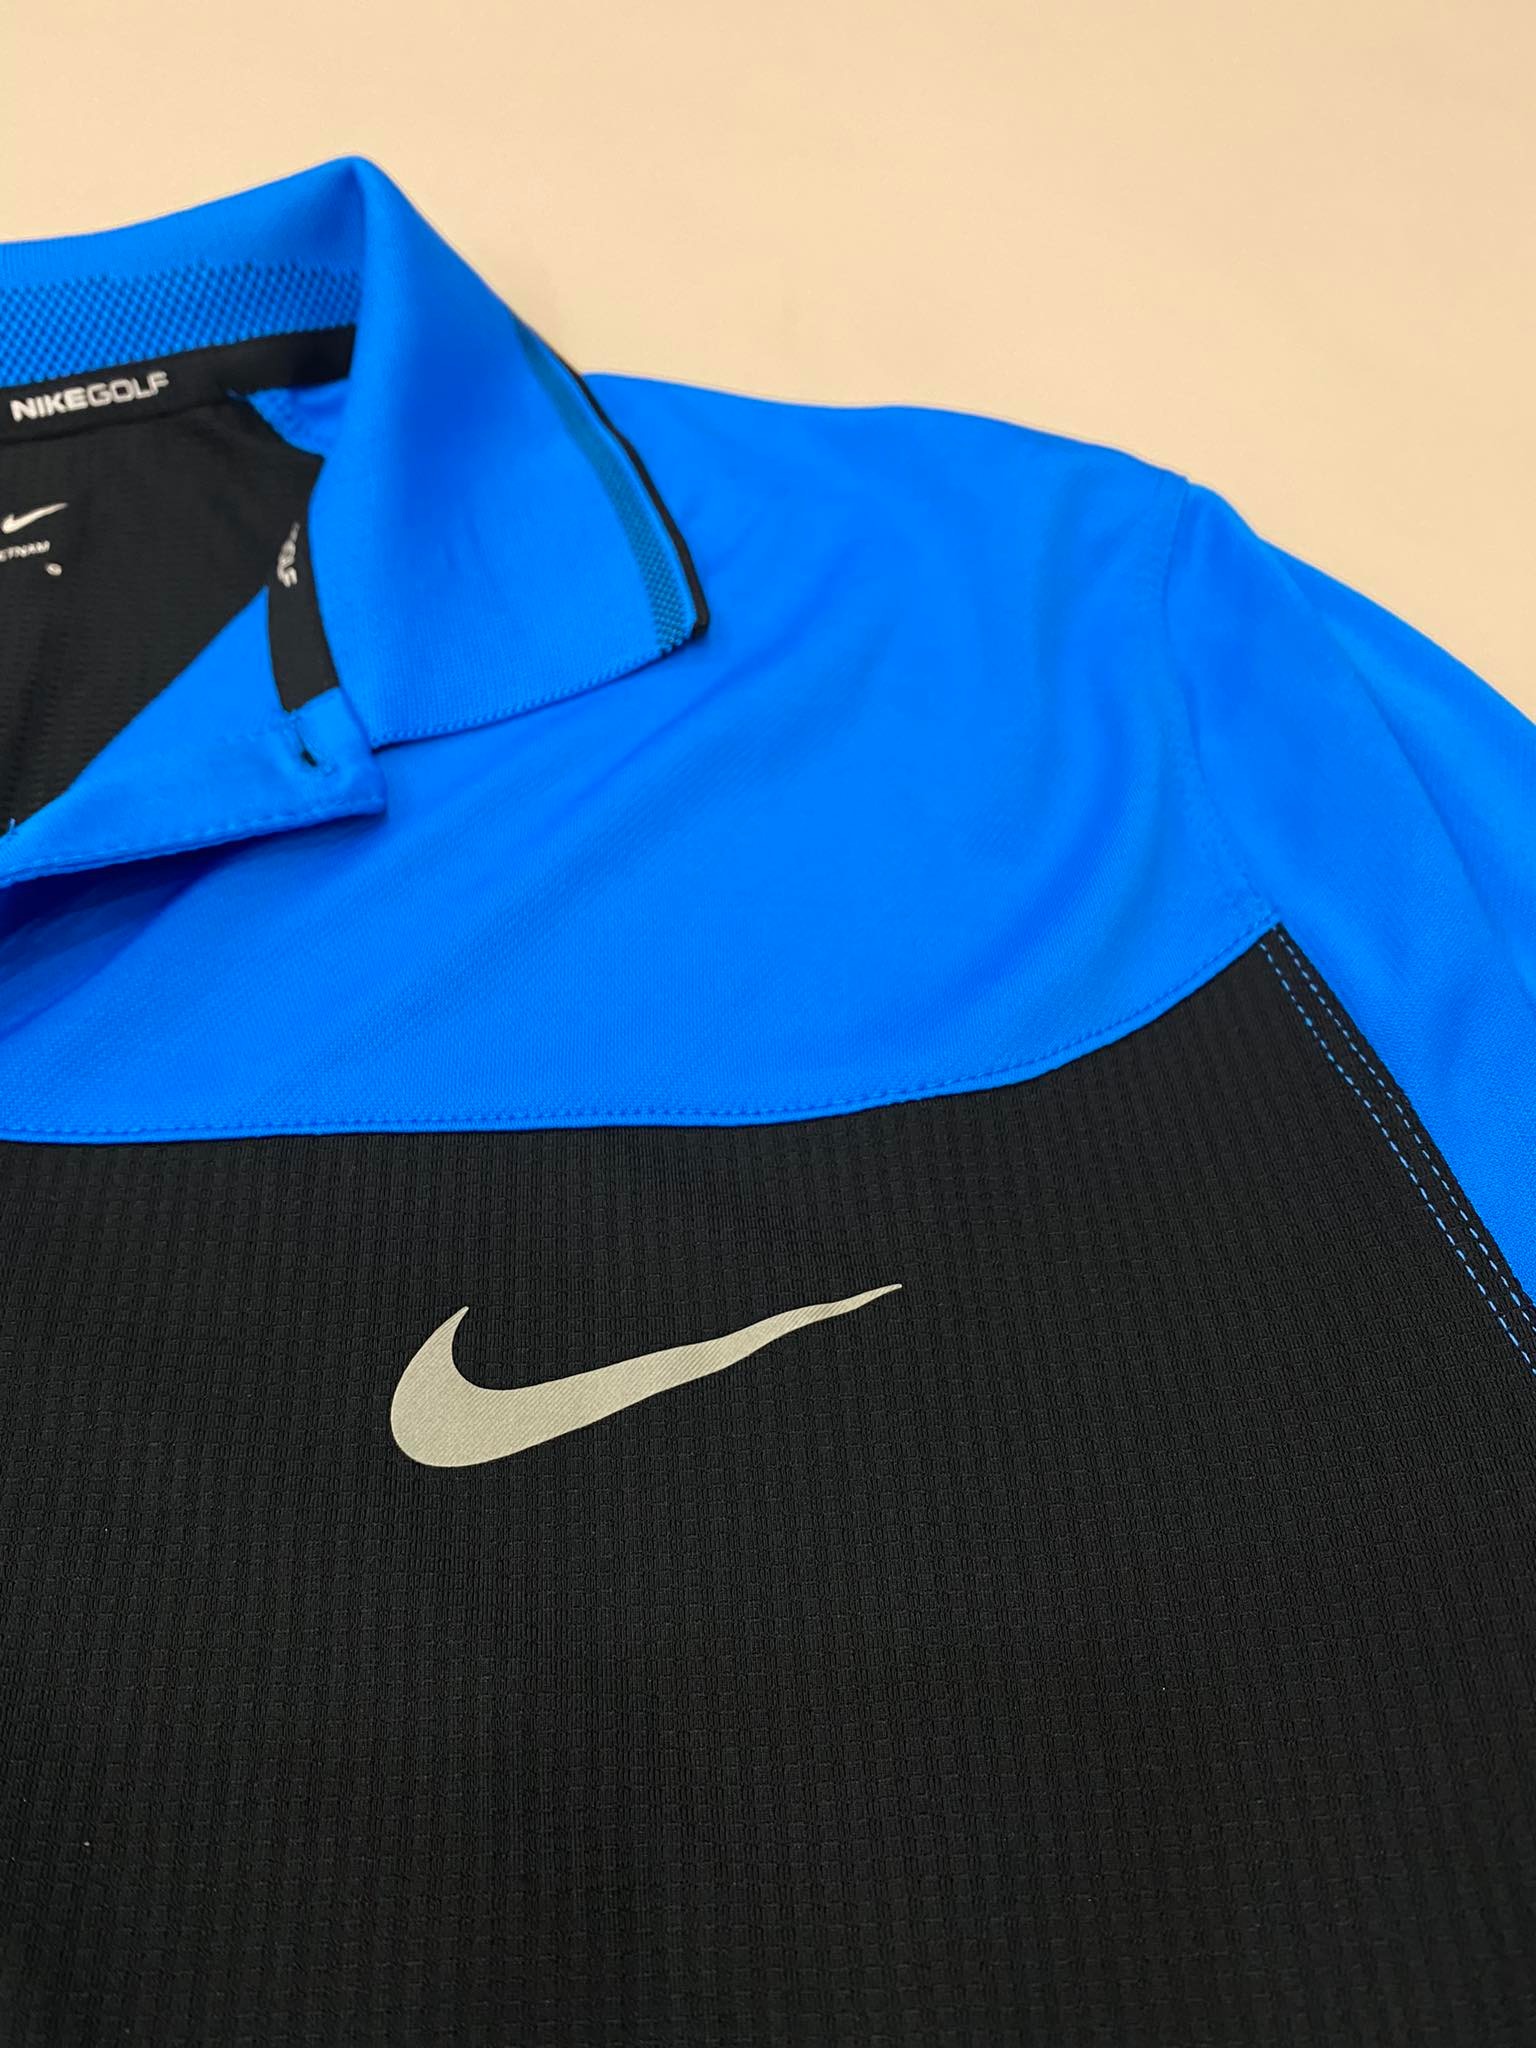 ÁO SWEATSHIRTS CHÍNH HÃNG - Nike Golf Dri-Fit PrePormance 